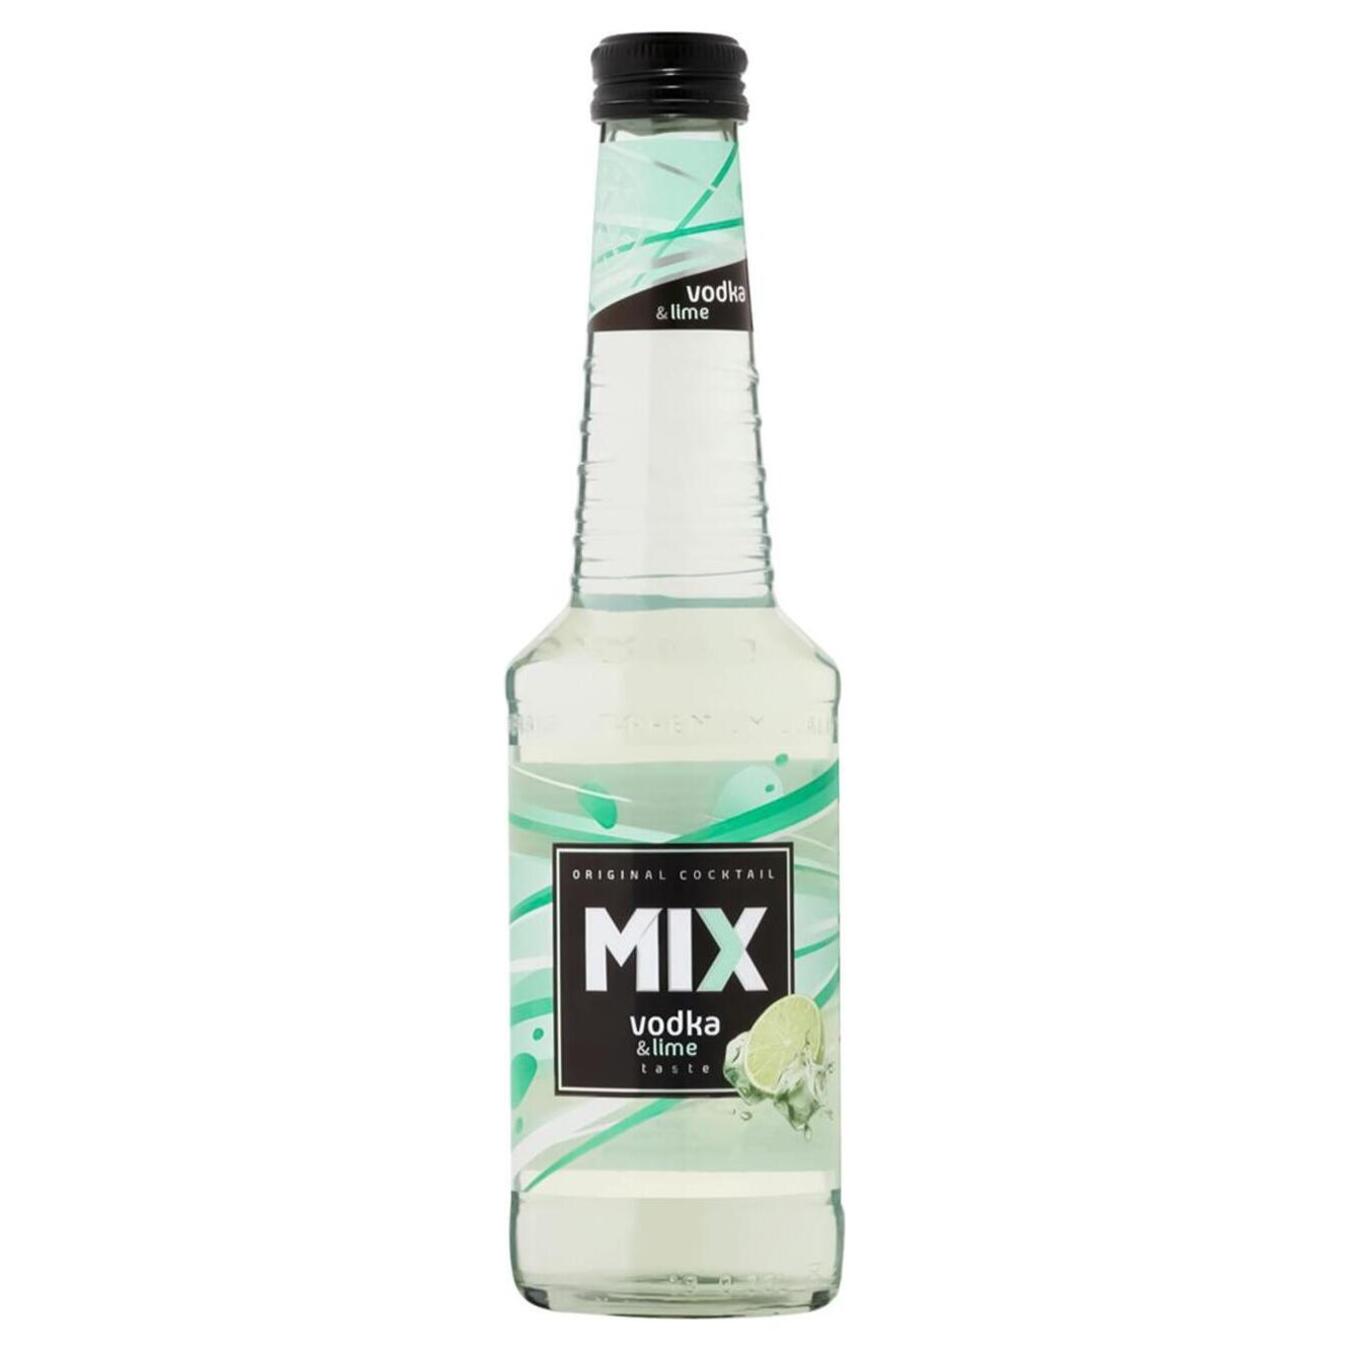 Low-alcohol drink MIX vodka lime 4% 0.33l glass